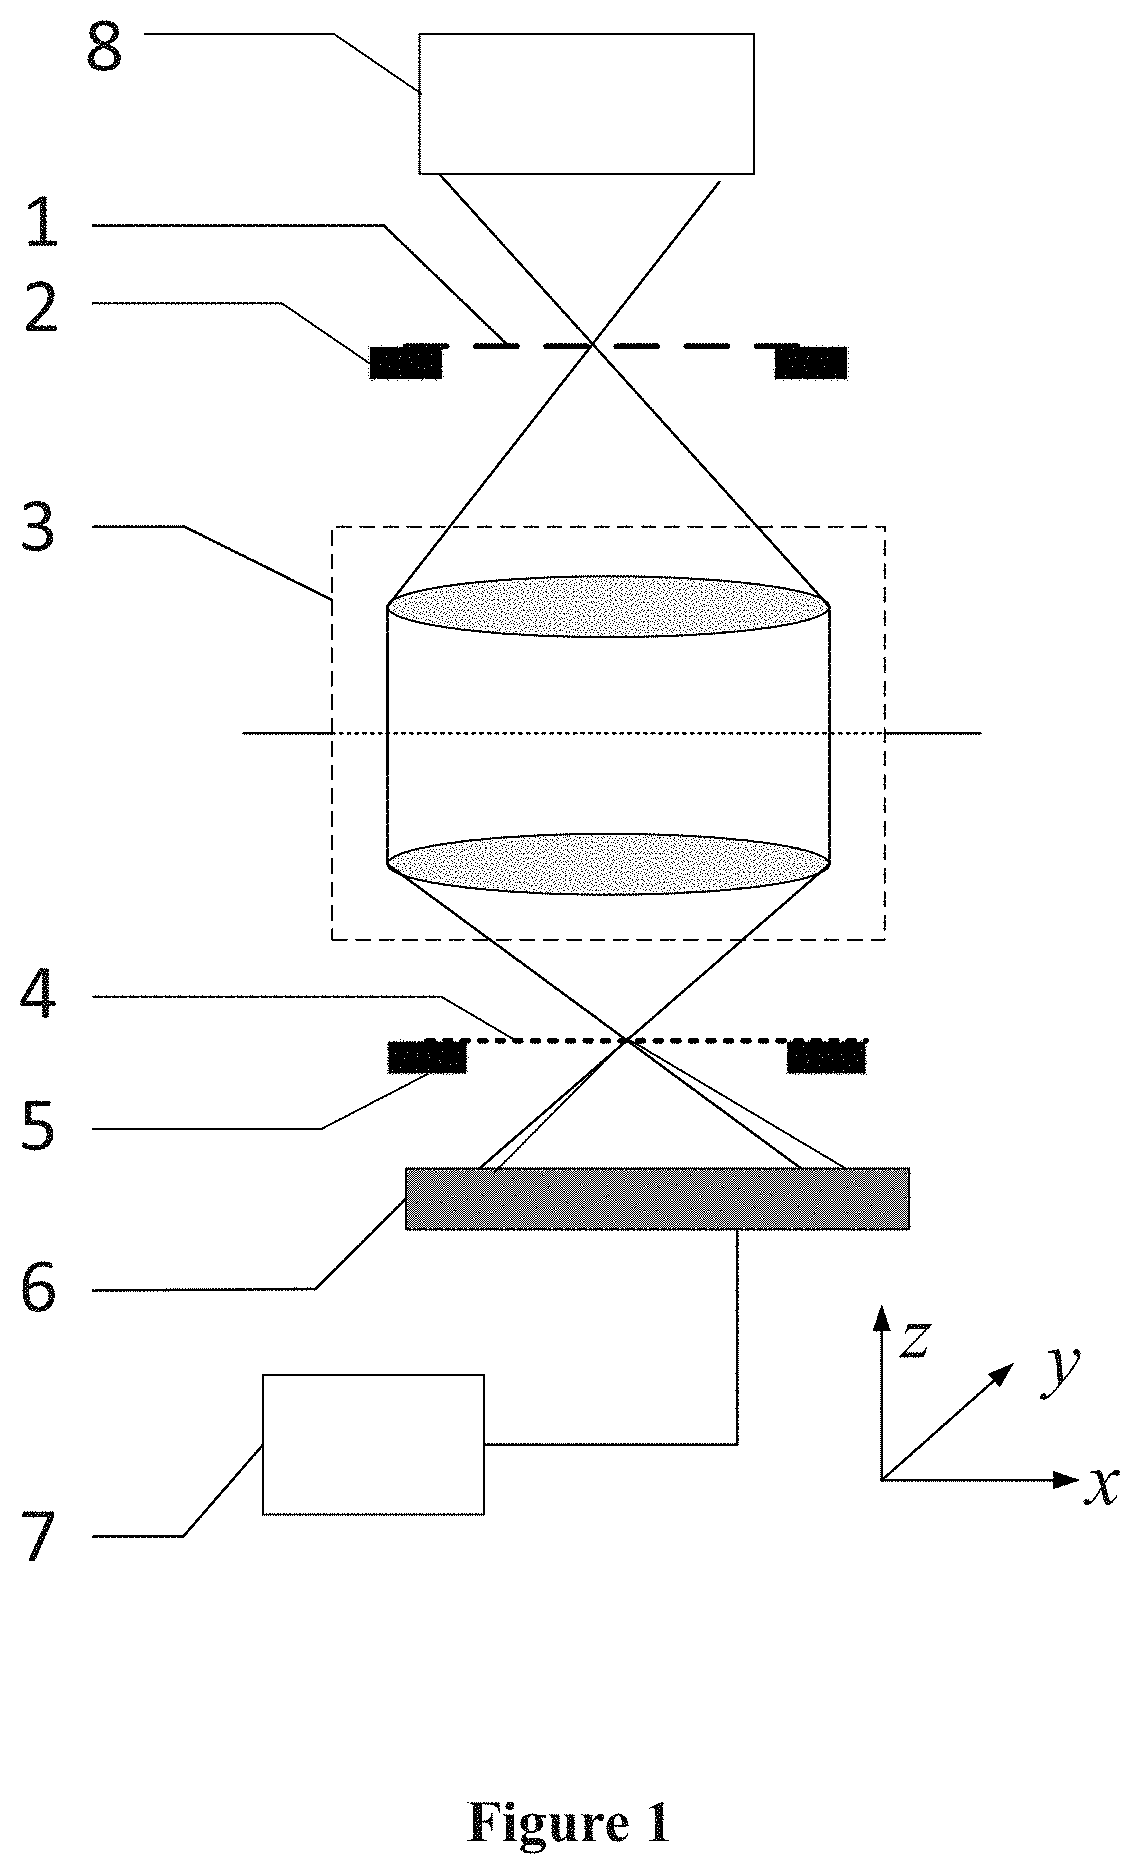 Method for wavefront measurement of optical imaging system based on grating shearing interferometry